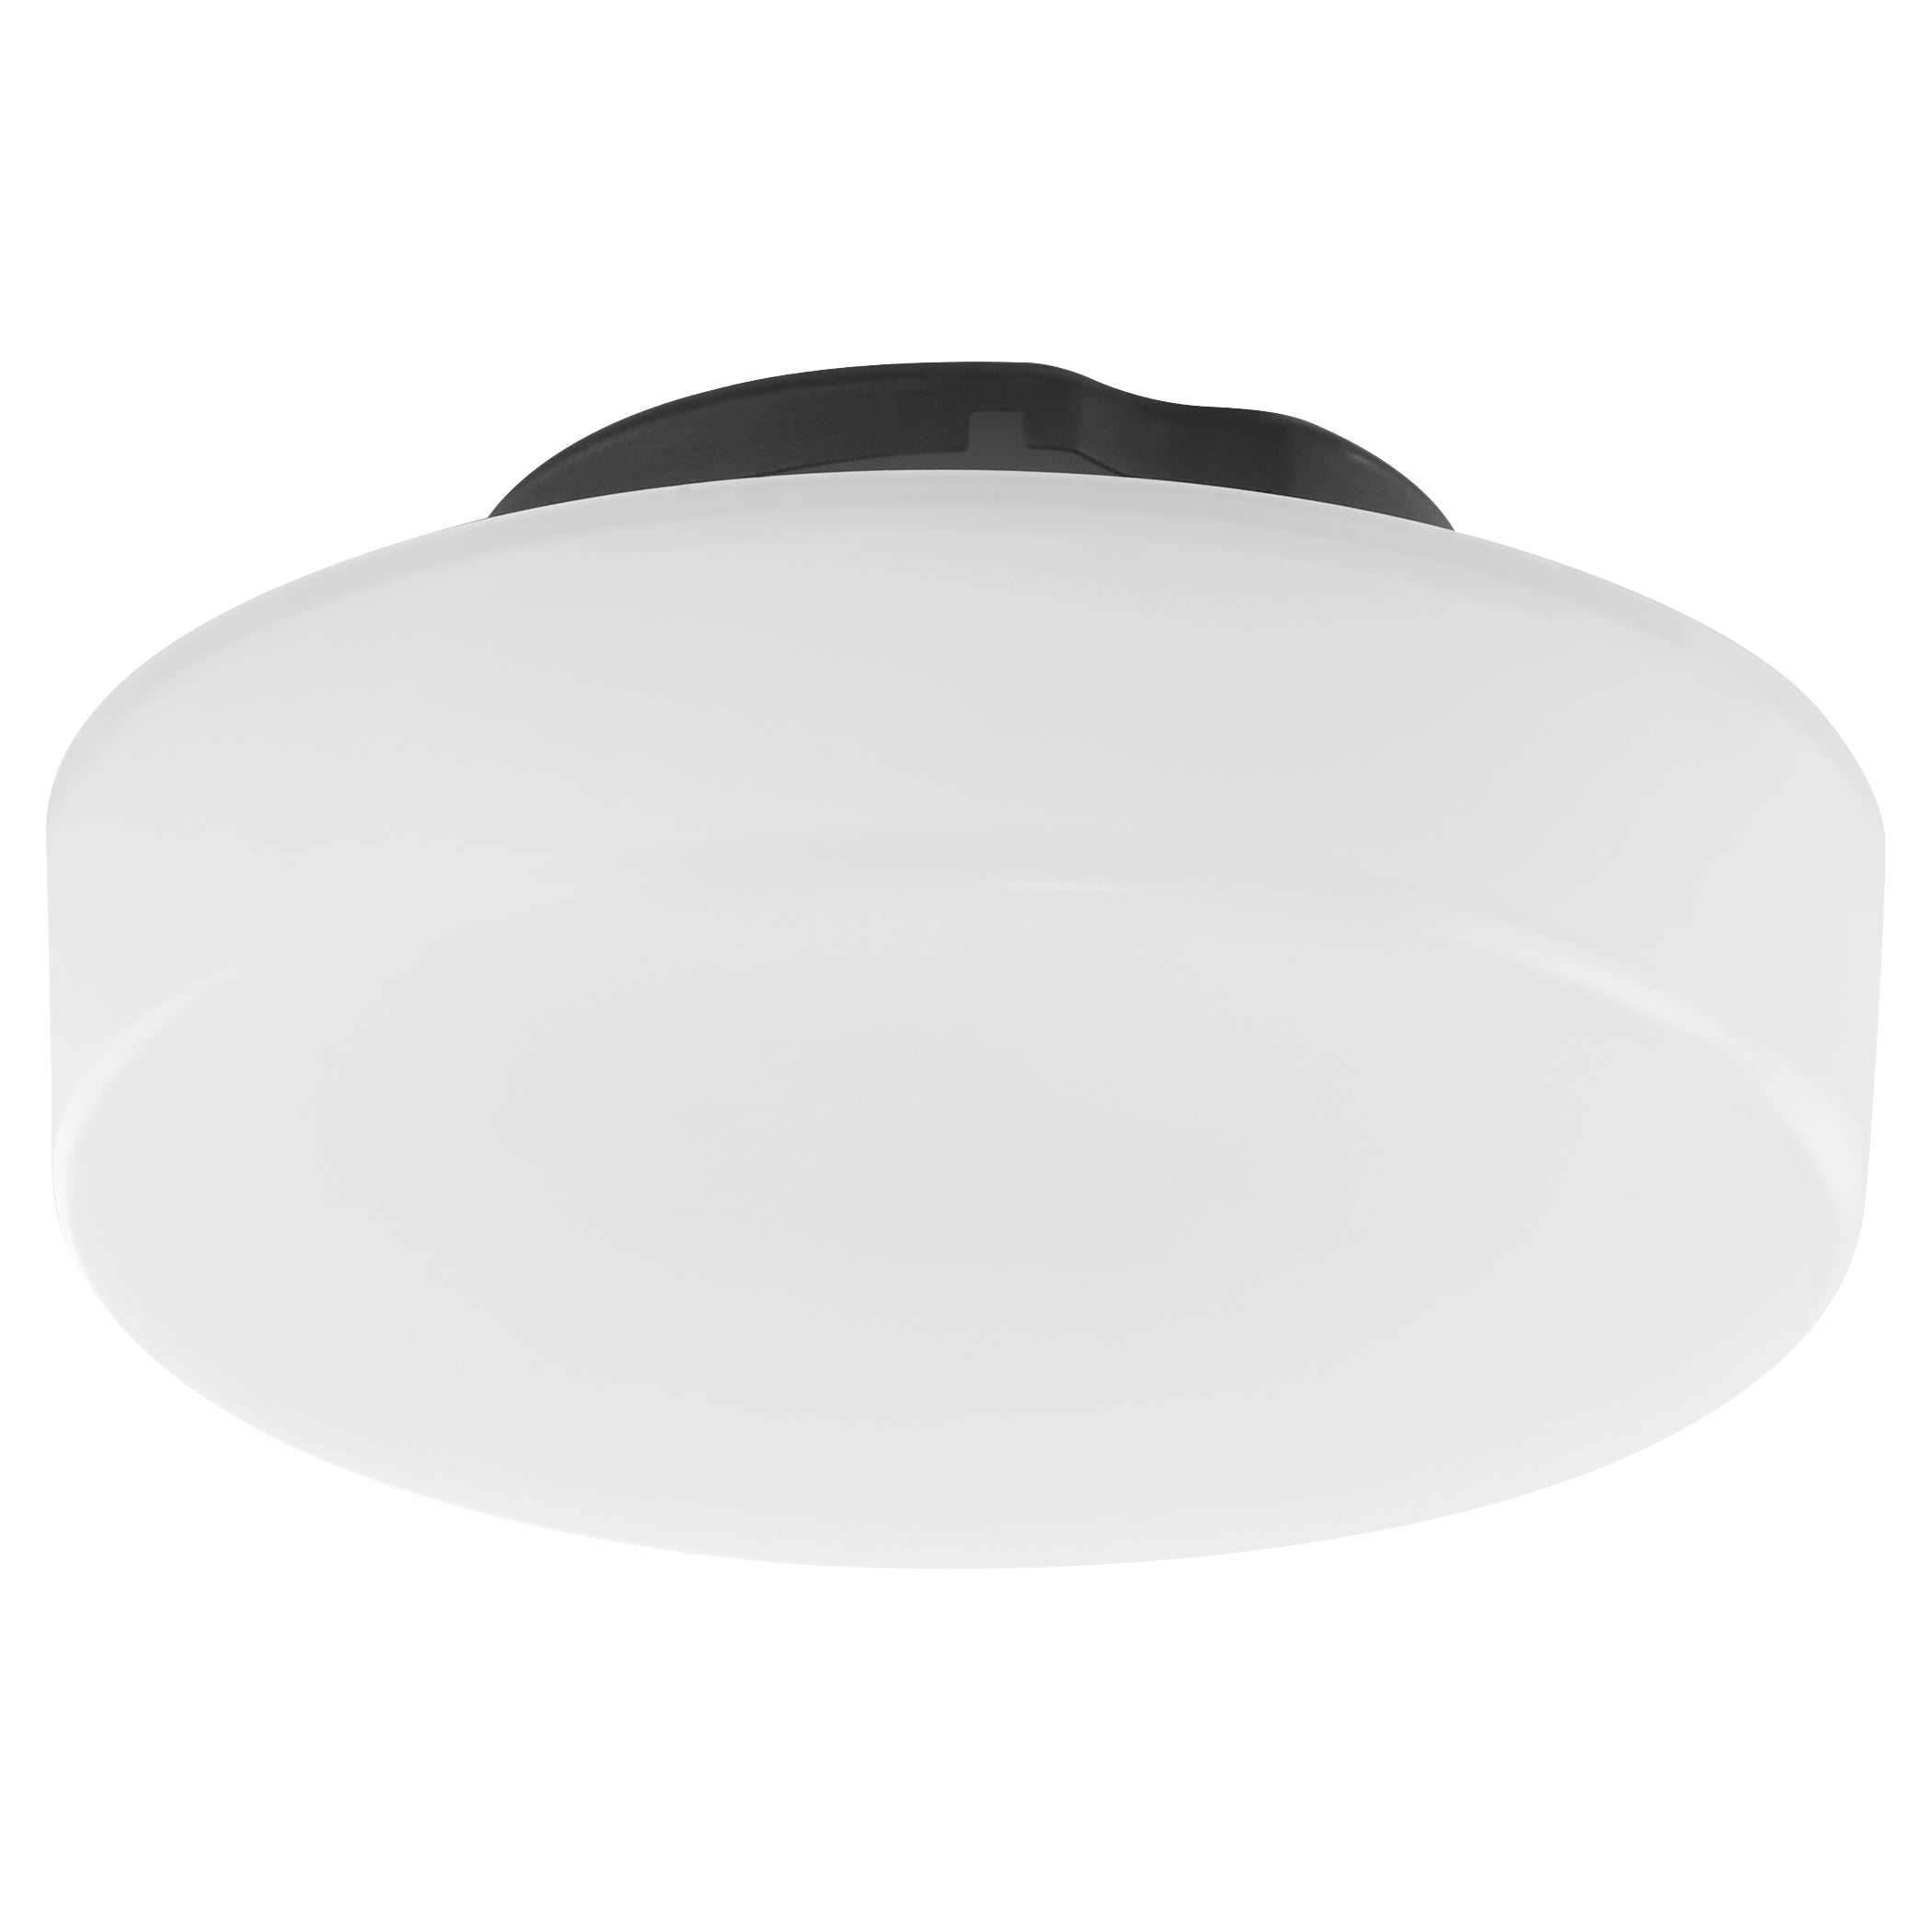 Oxygen Samaran 3-9-116 Ceiling Fan LED Light Kit